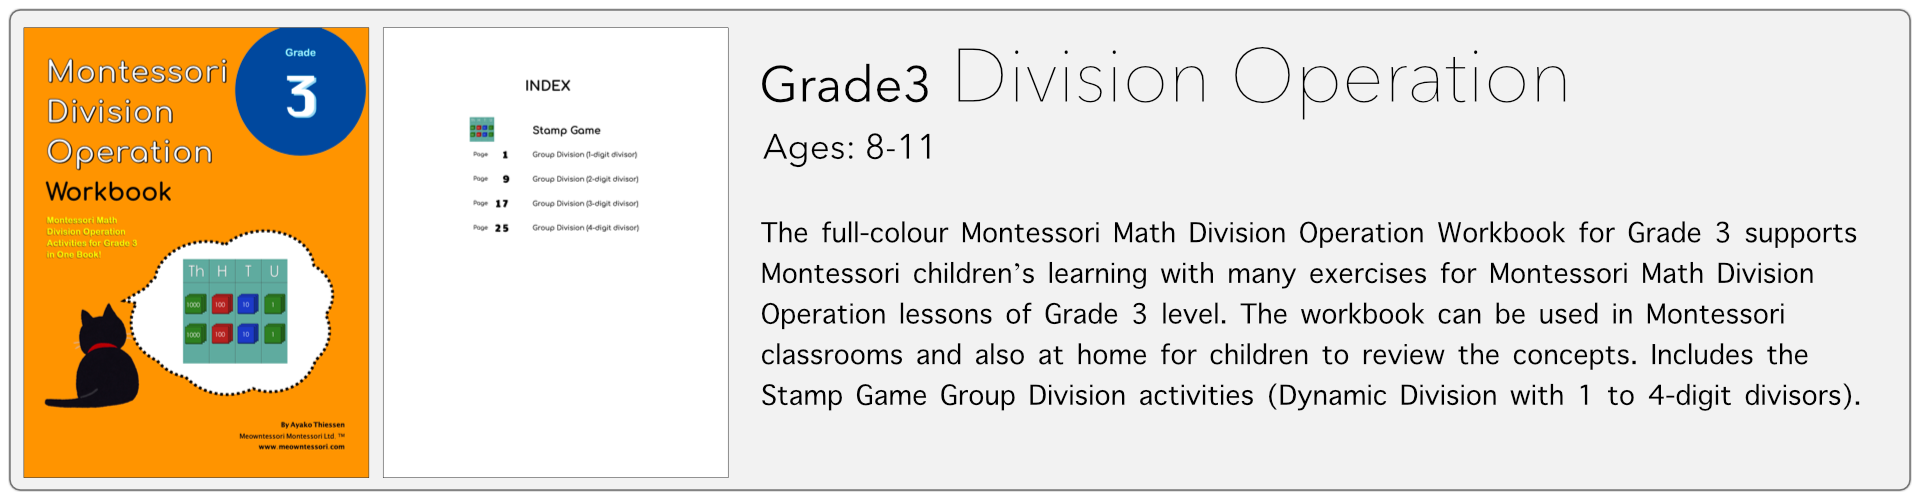 grade3 division operation